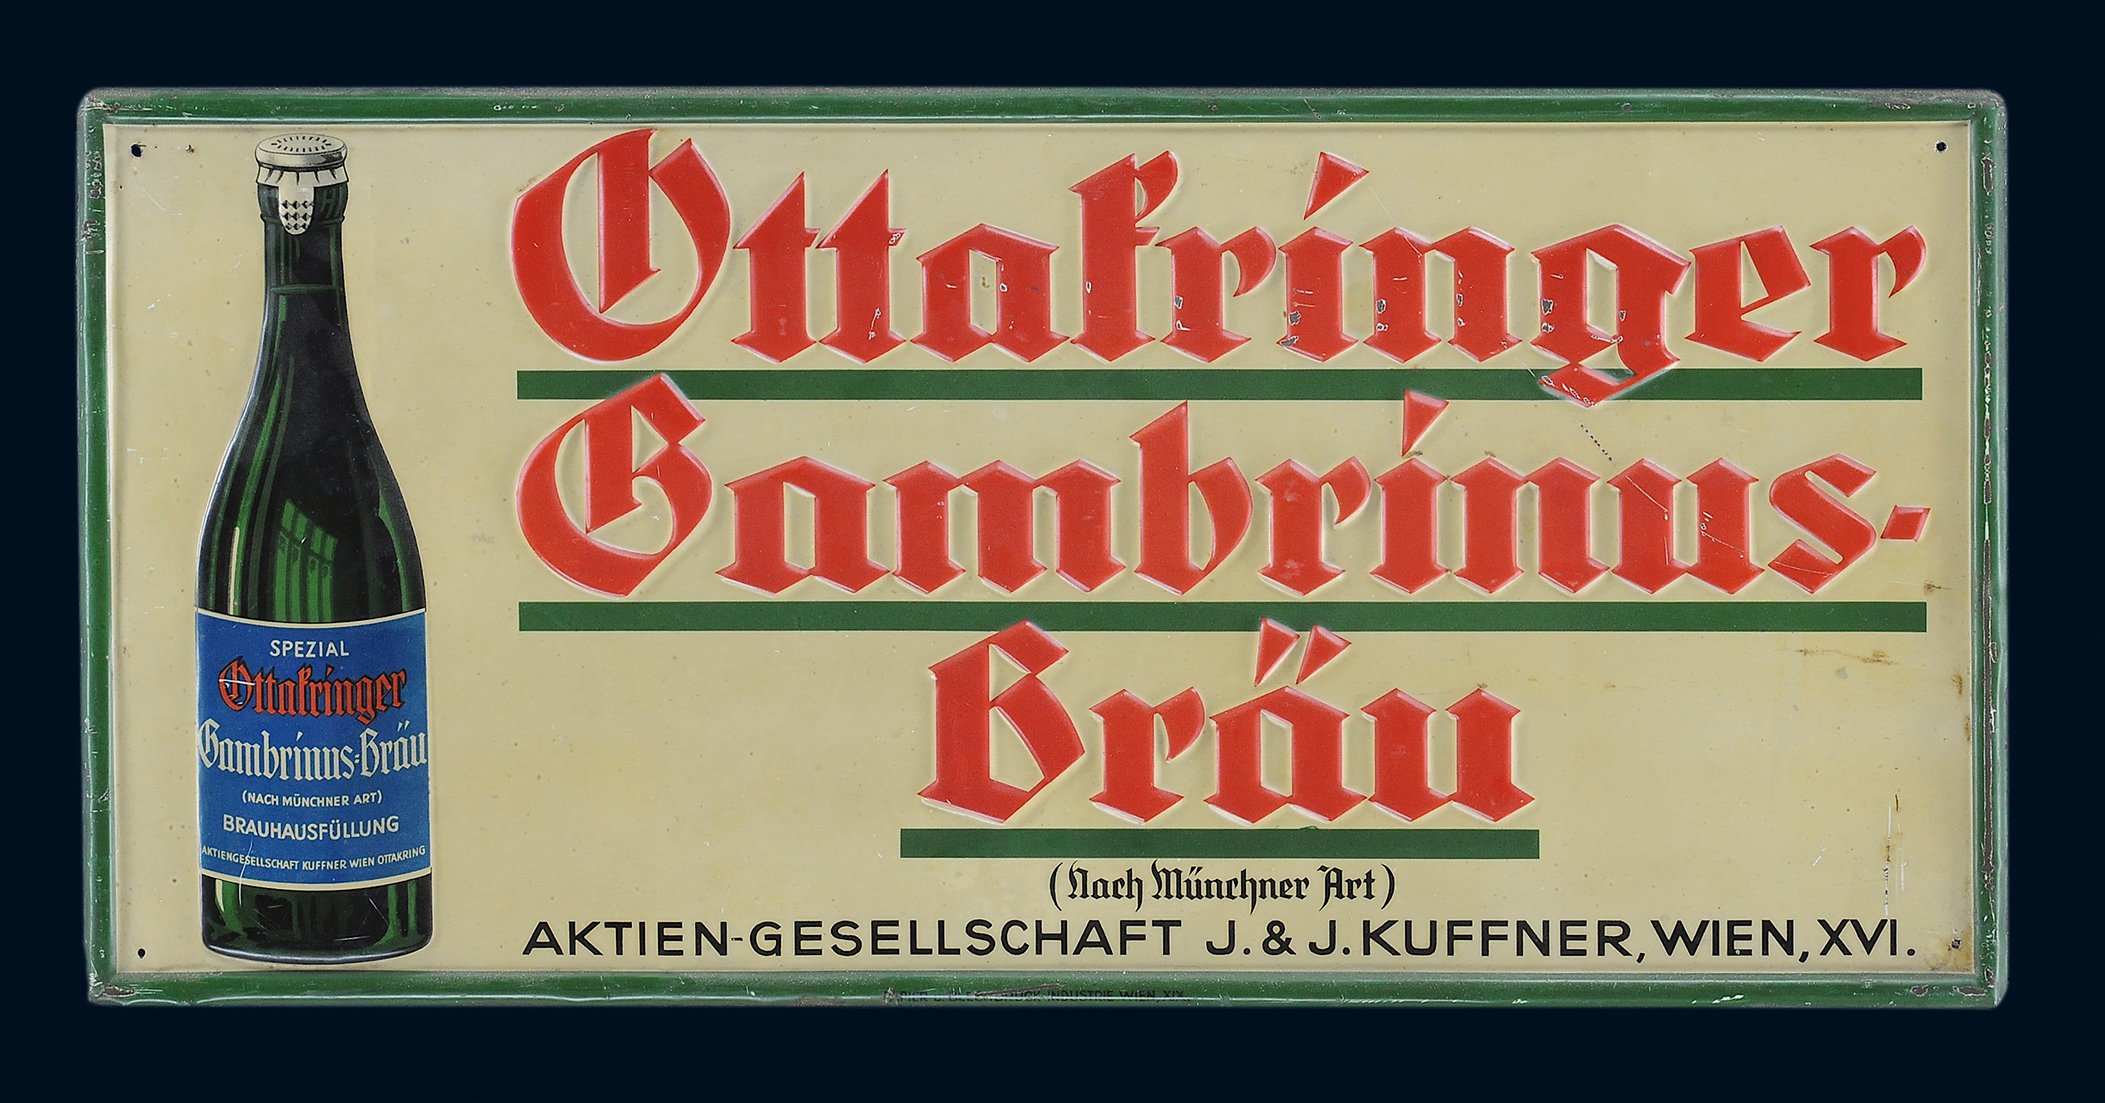 Ottakringer Gambrinus-Bräu